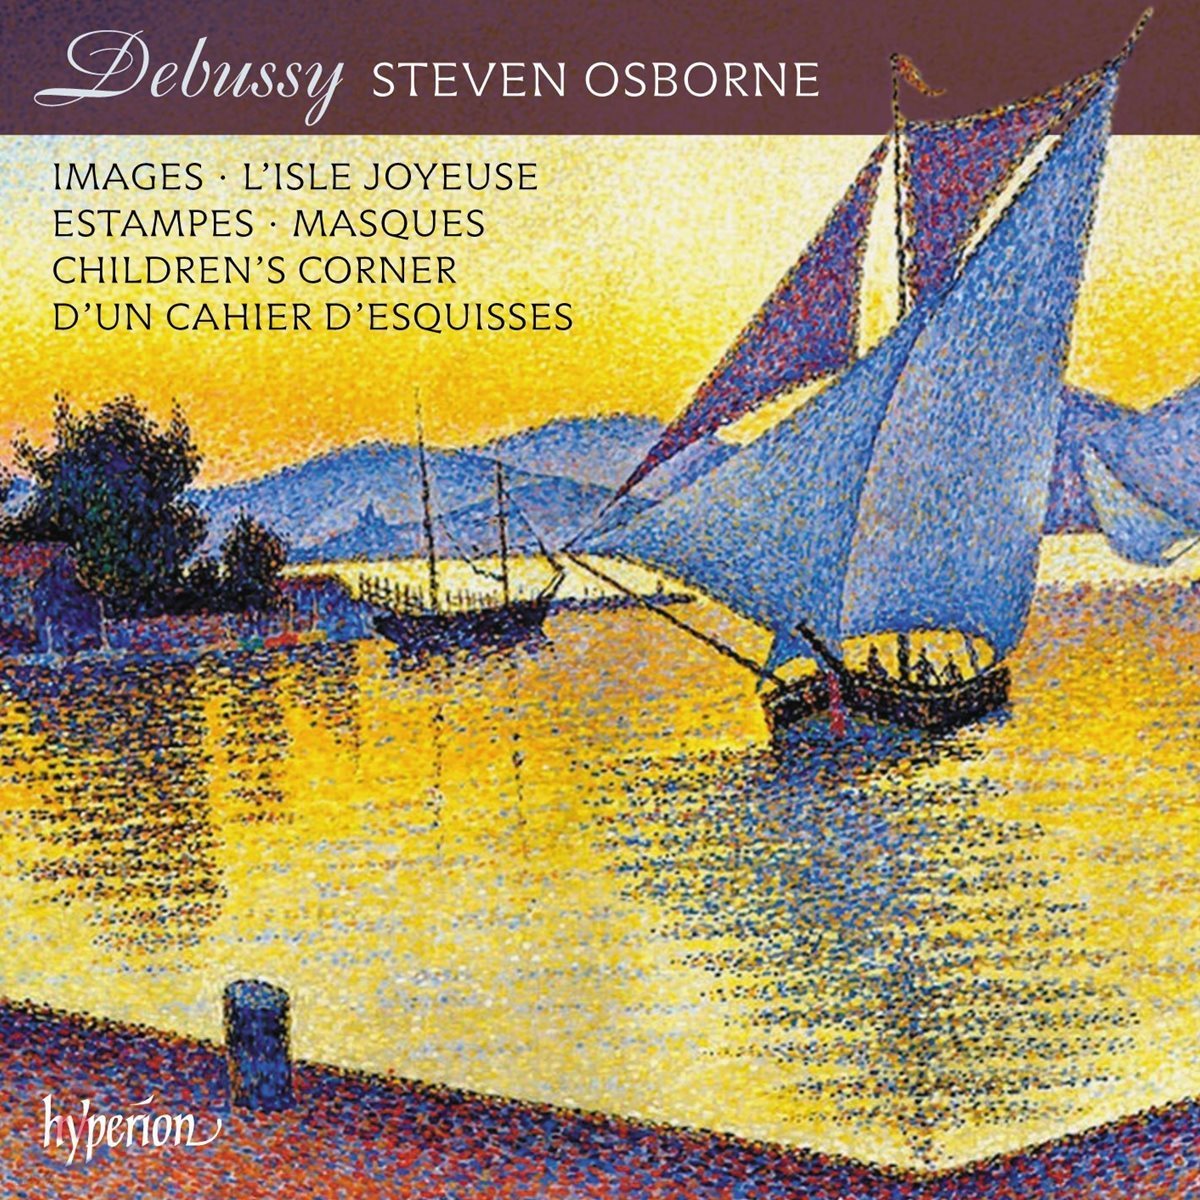 Steven Osborne 드뷔시: 영상, 판화, 어린이 세계, 마스크 - 스티븐 오스본 (Debussy: Images, Estampes, Children's Corner, Masques, L'Isle Joyeuse)